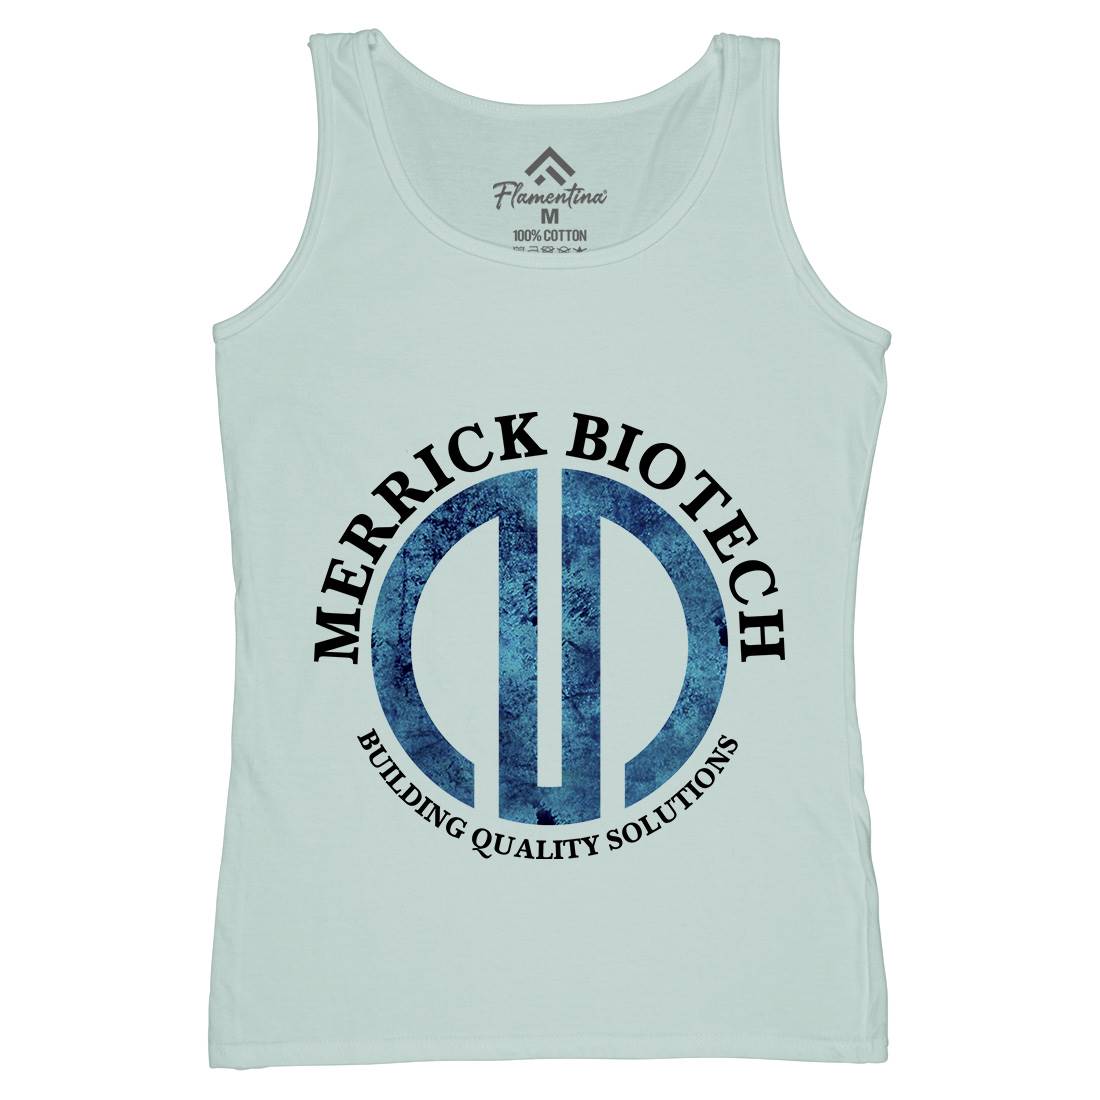 Merrick Biotech Womens Organic Tank Top Vest Space D393